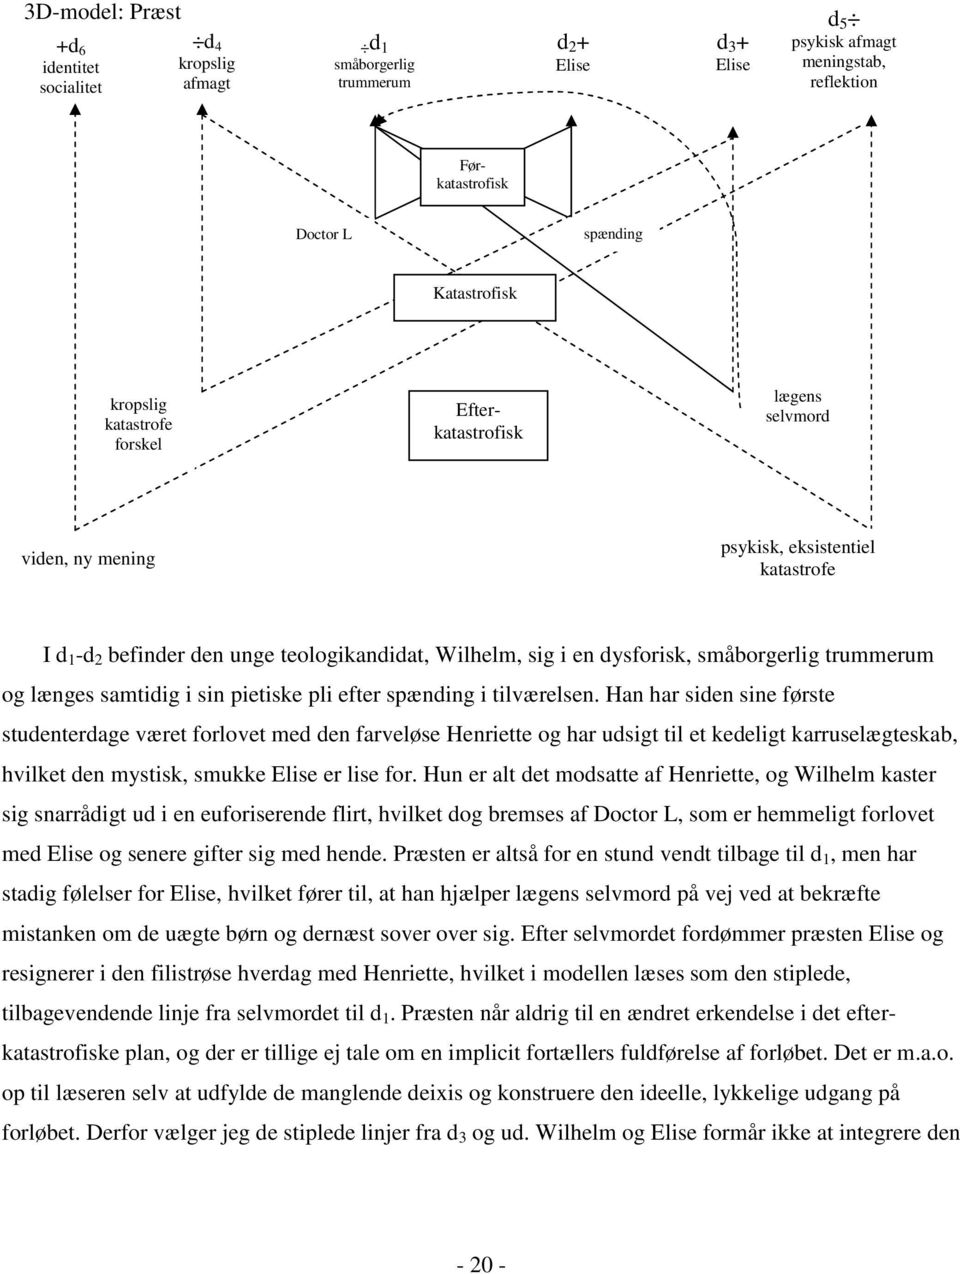 LITTERÆR ANALYSE II. Metodeopgave: Steen Steensen Blicher: Sildig Opvaagnen  - Nykritik & 3D-model - PDF Free Download